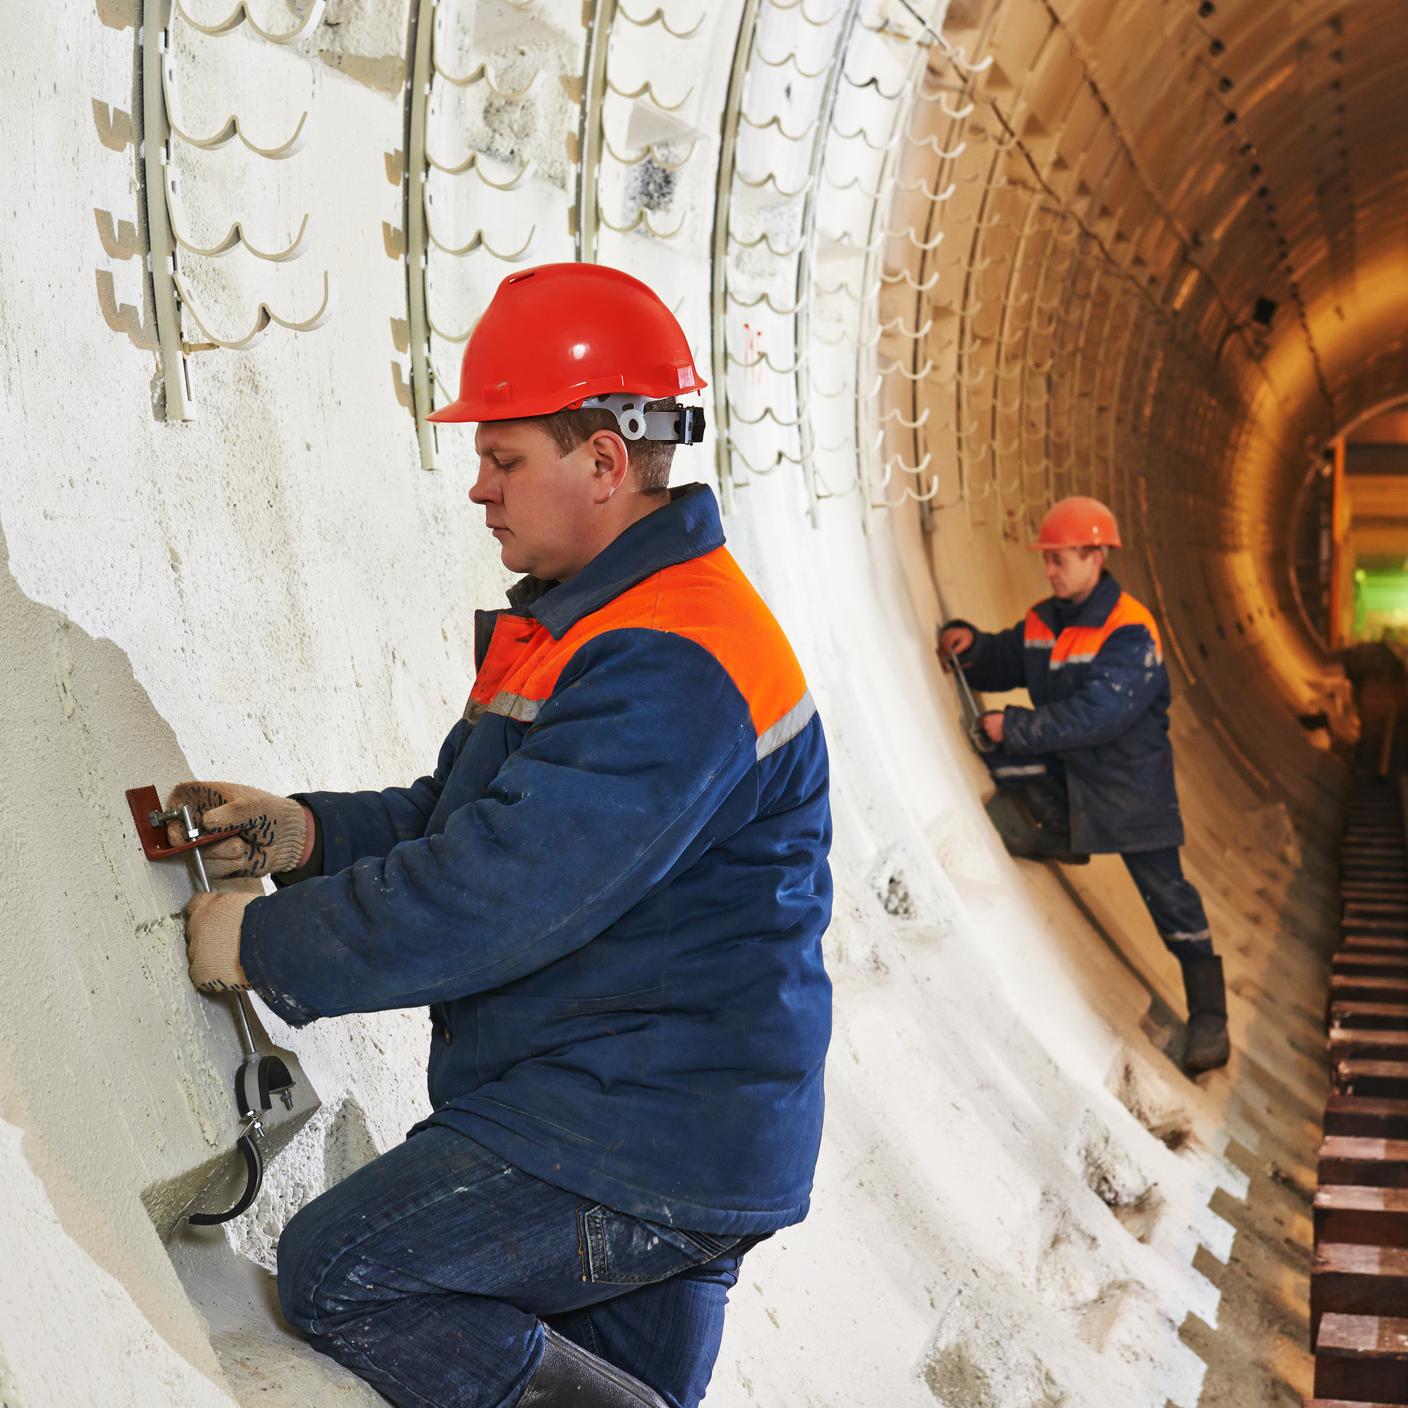 Tunneller worker installing fixture in underground subway metro construction site